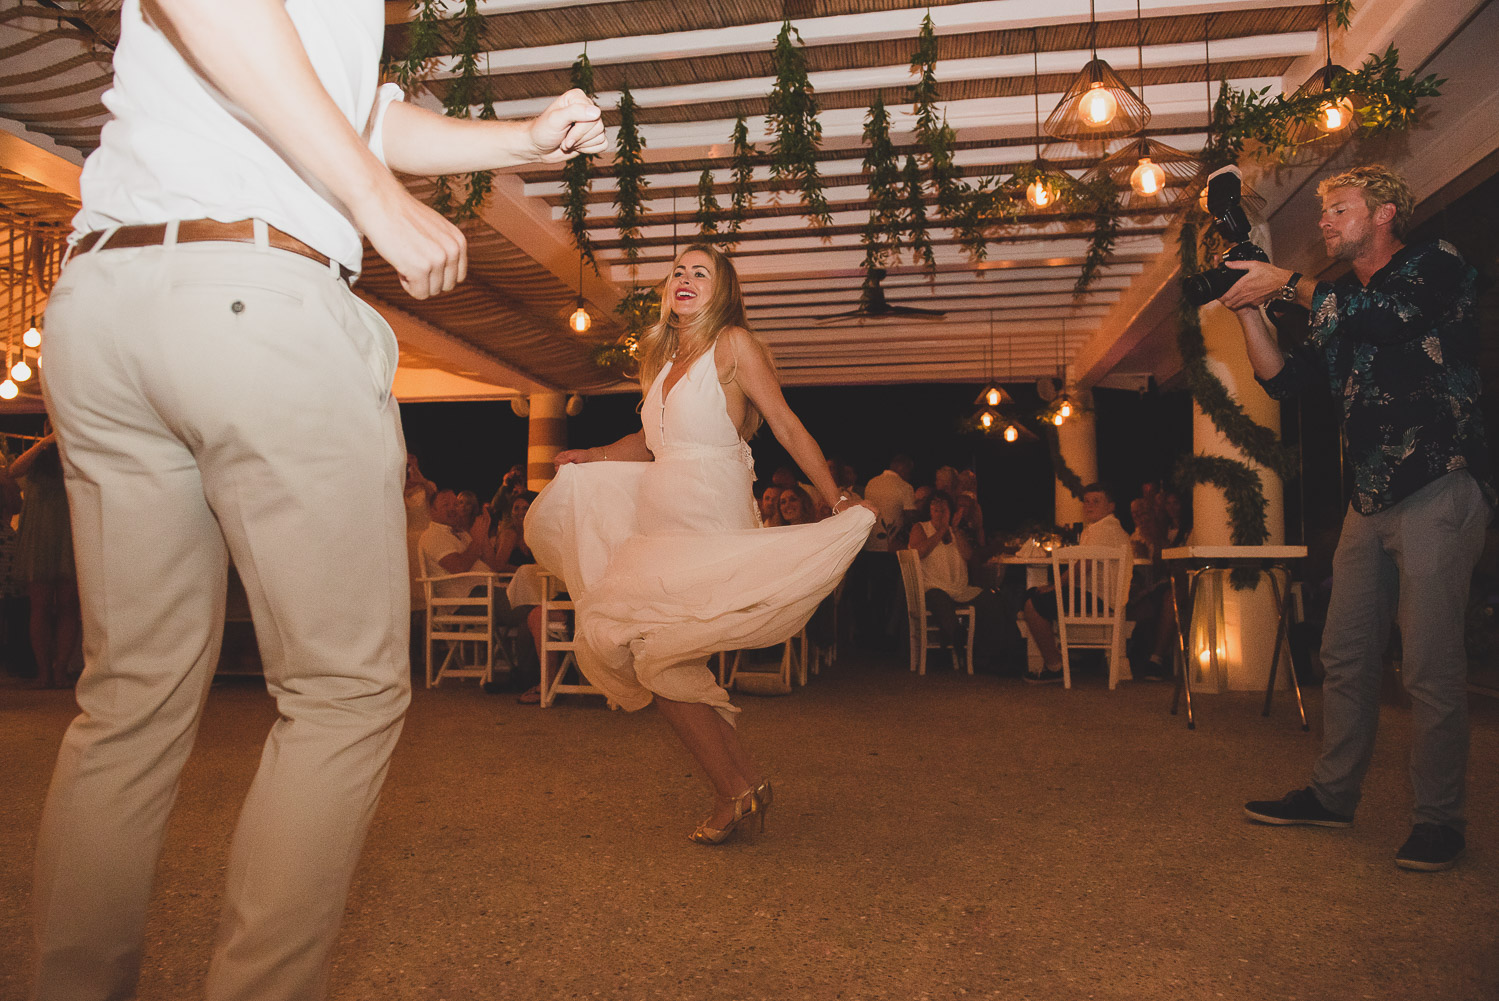 Wedding photographer Mykonos: wild first dance with bride swaying her dress at Elia during Mykonos wedding reception.